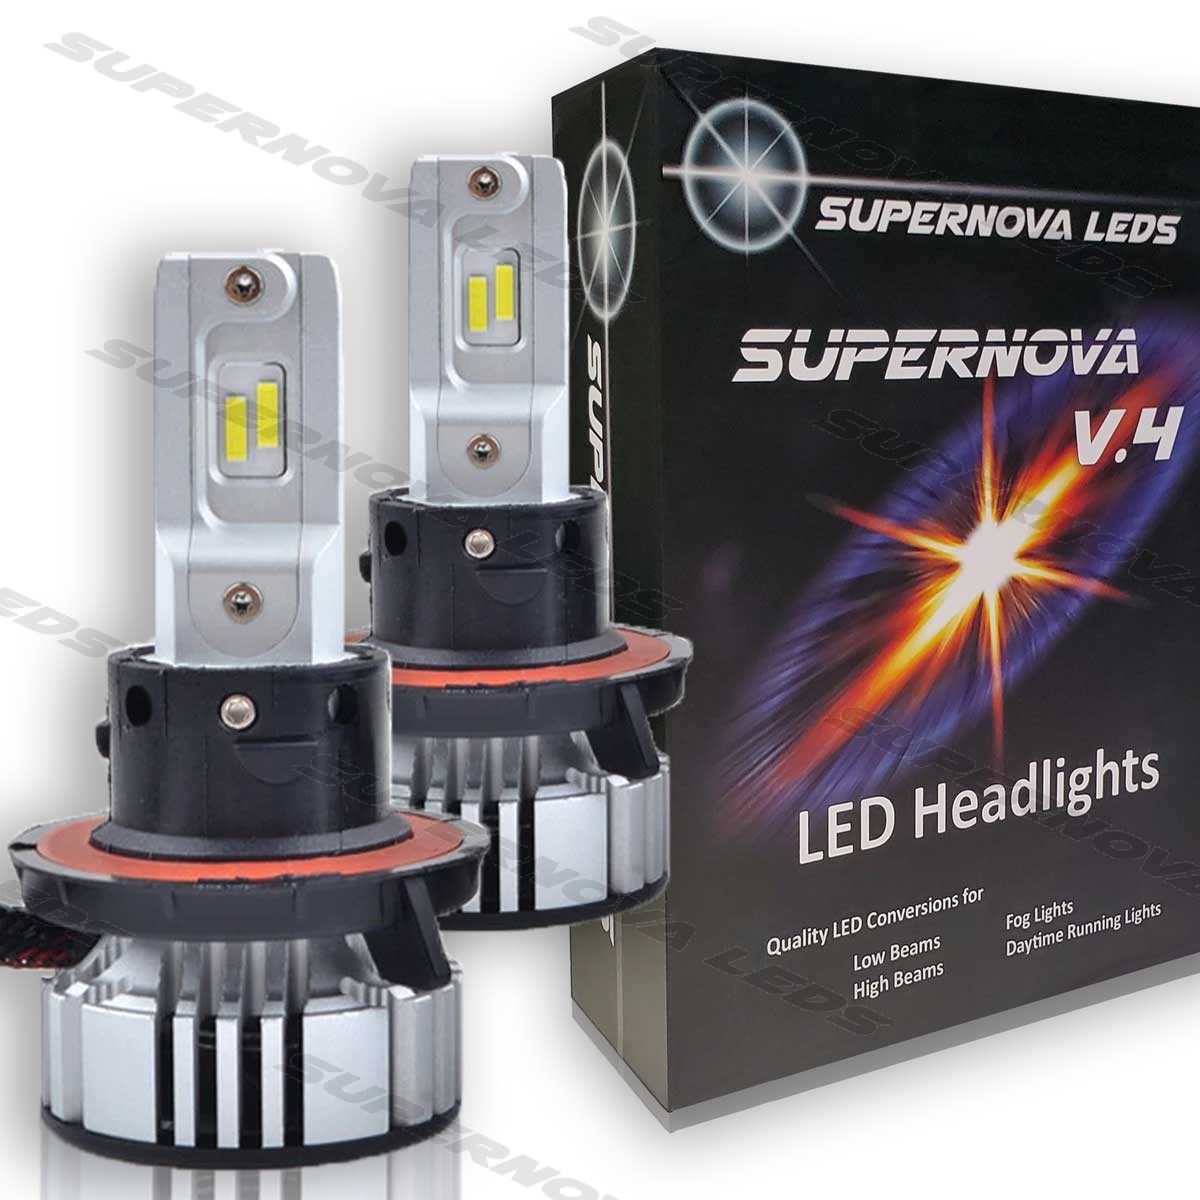 Supernova V.4 X Headlights s-v.4